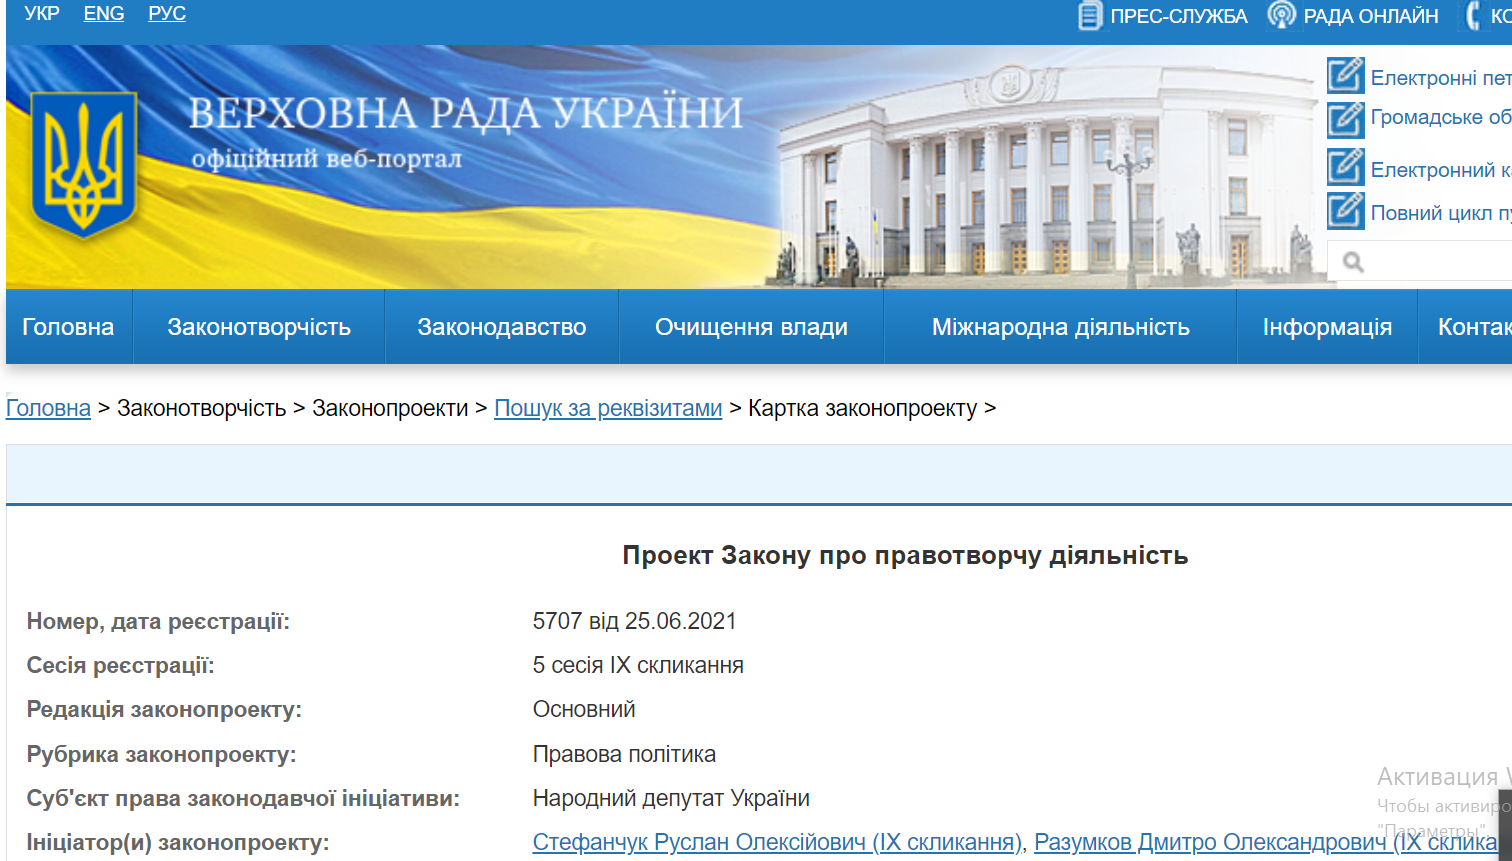 http://w1.c1.rada.gov.ua/pls/zweb2/webproc4_1?id=&pf3511=72355